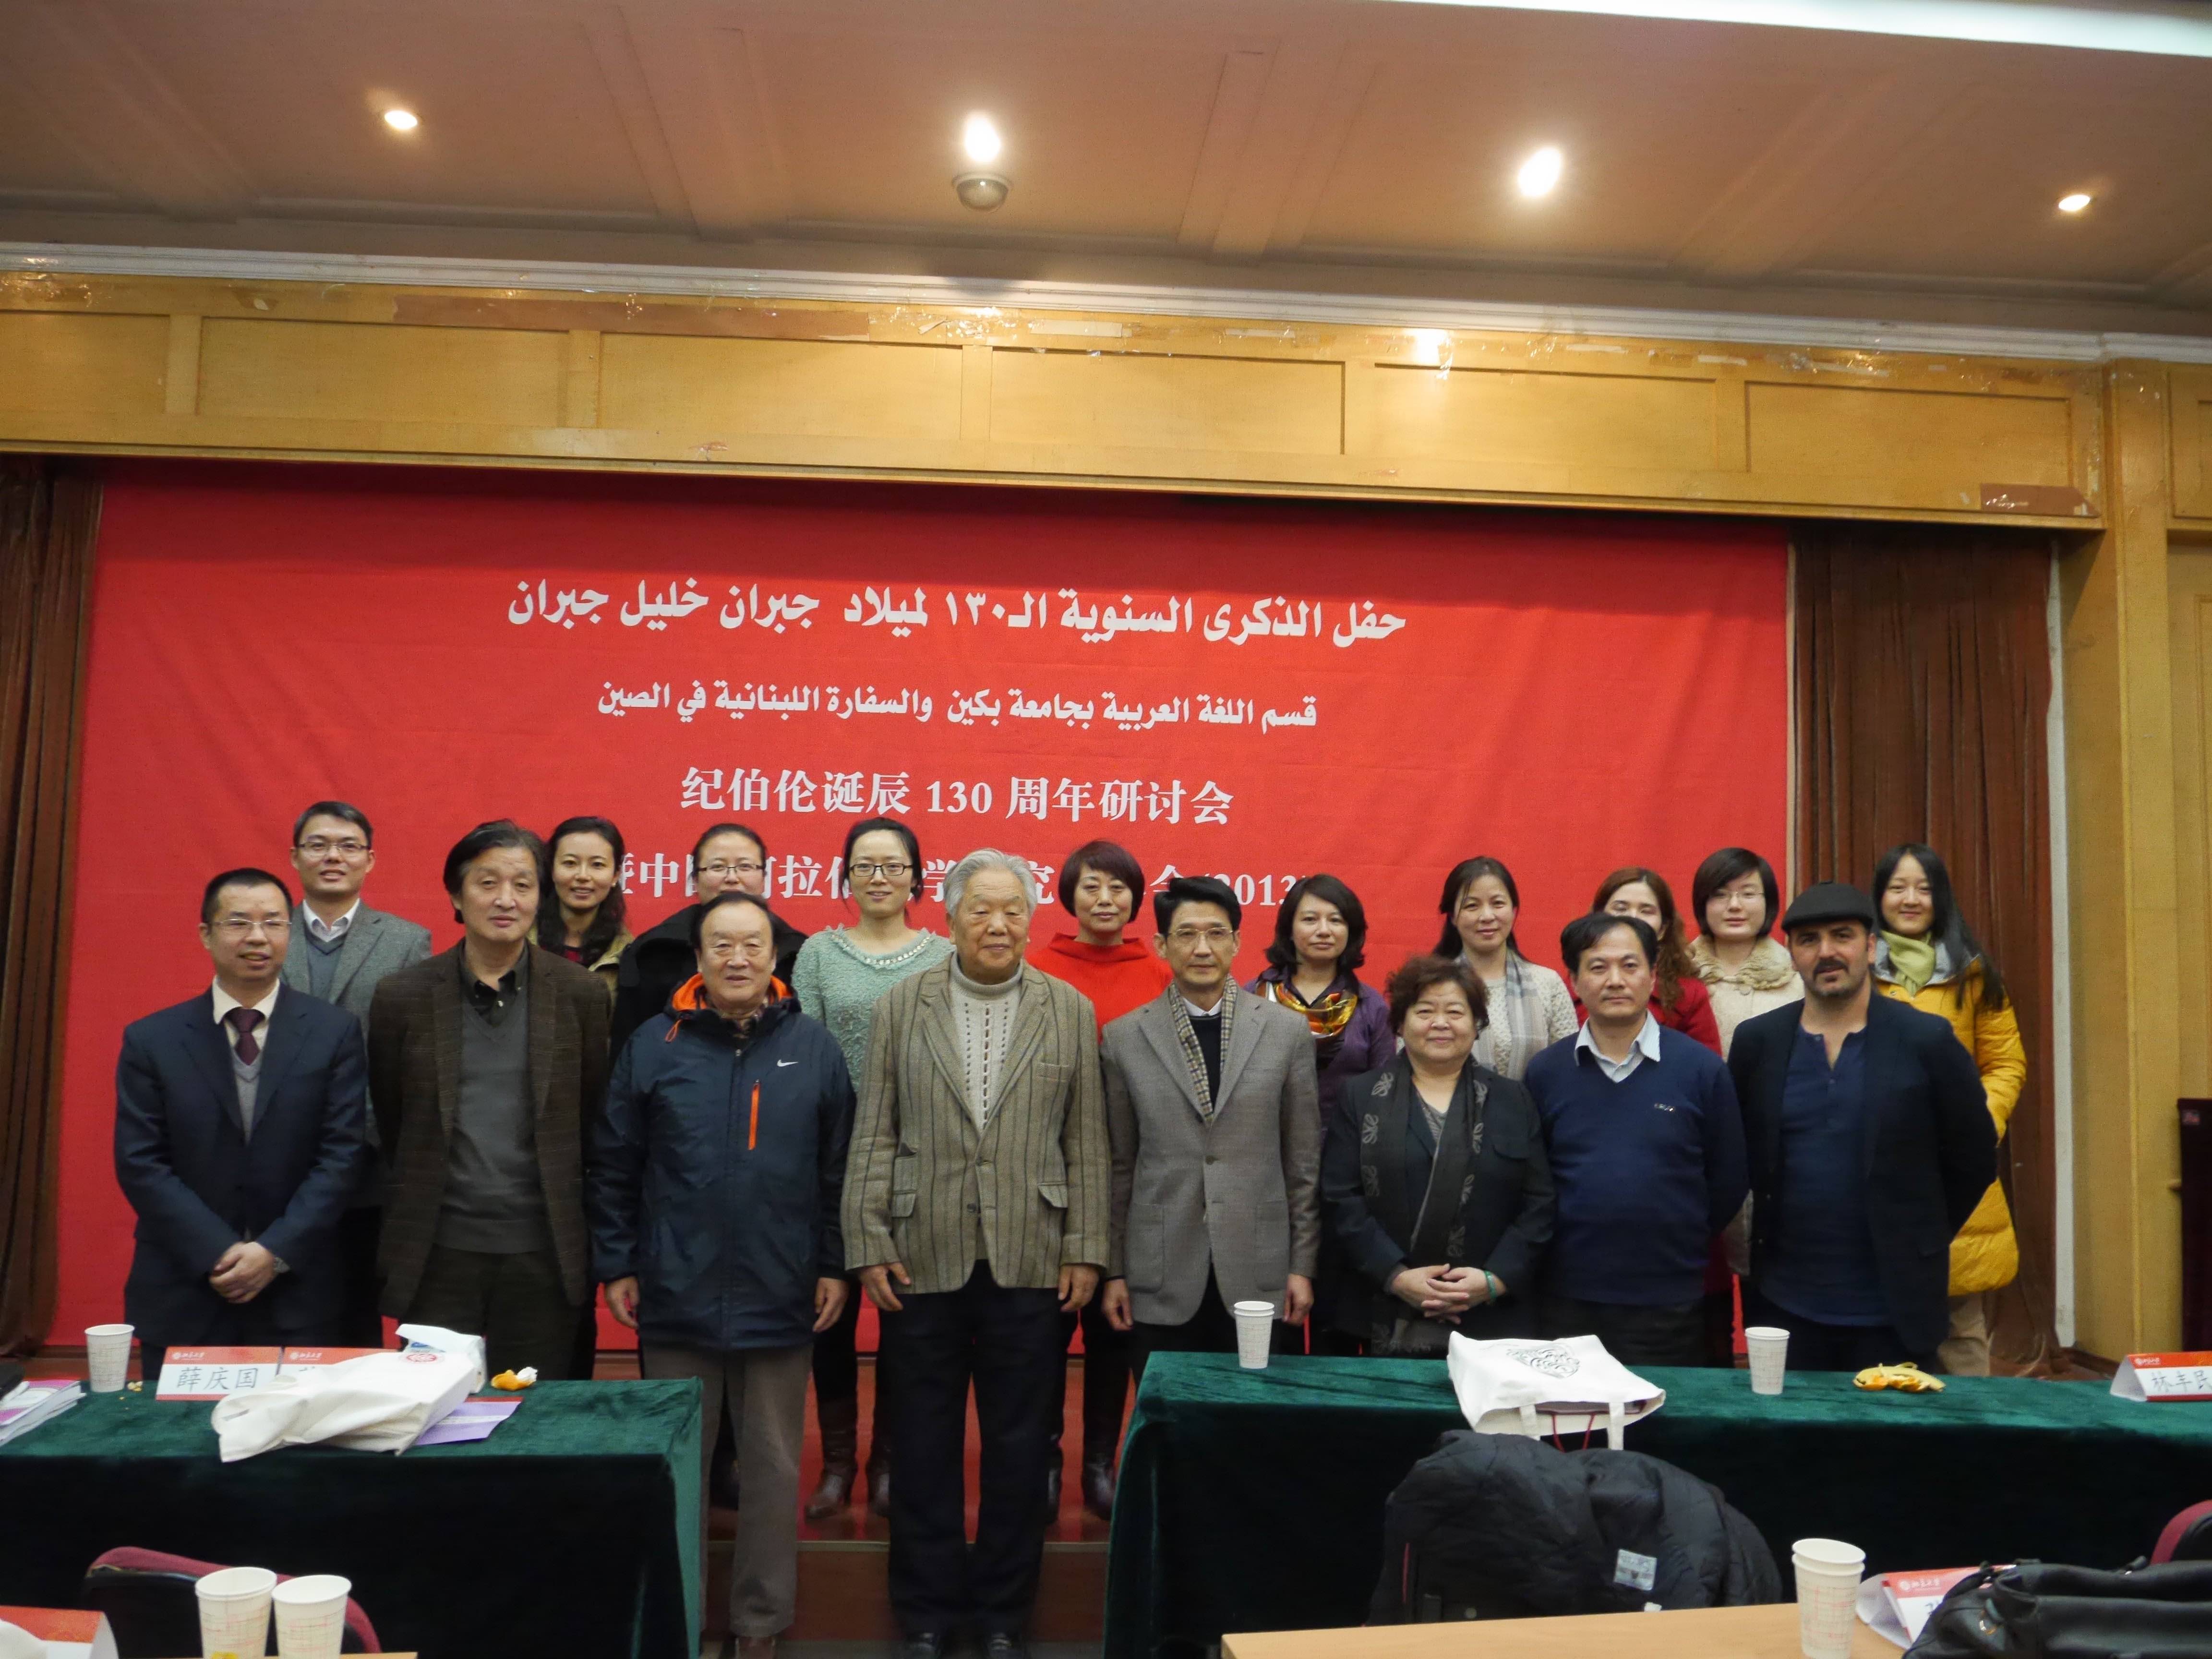 Glen Kalem (right of image) in attendance - Middle East Literature Conference - Peking University - Nov 24th 2013 